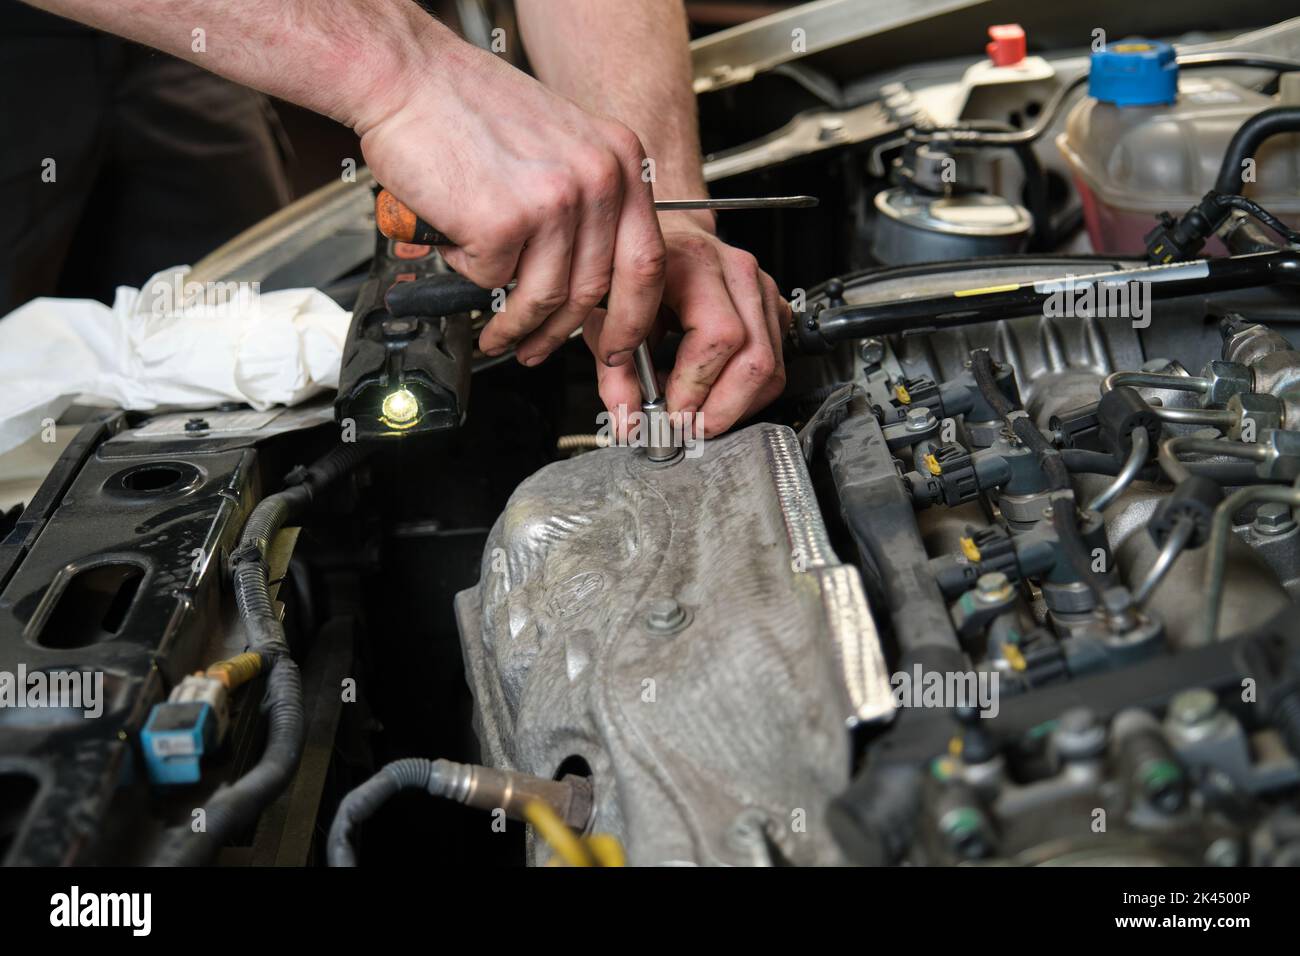 Close up of car mechanic hands doing car service and maintenance. Stock Photo